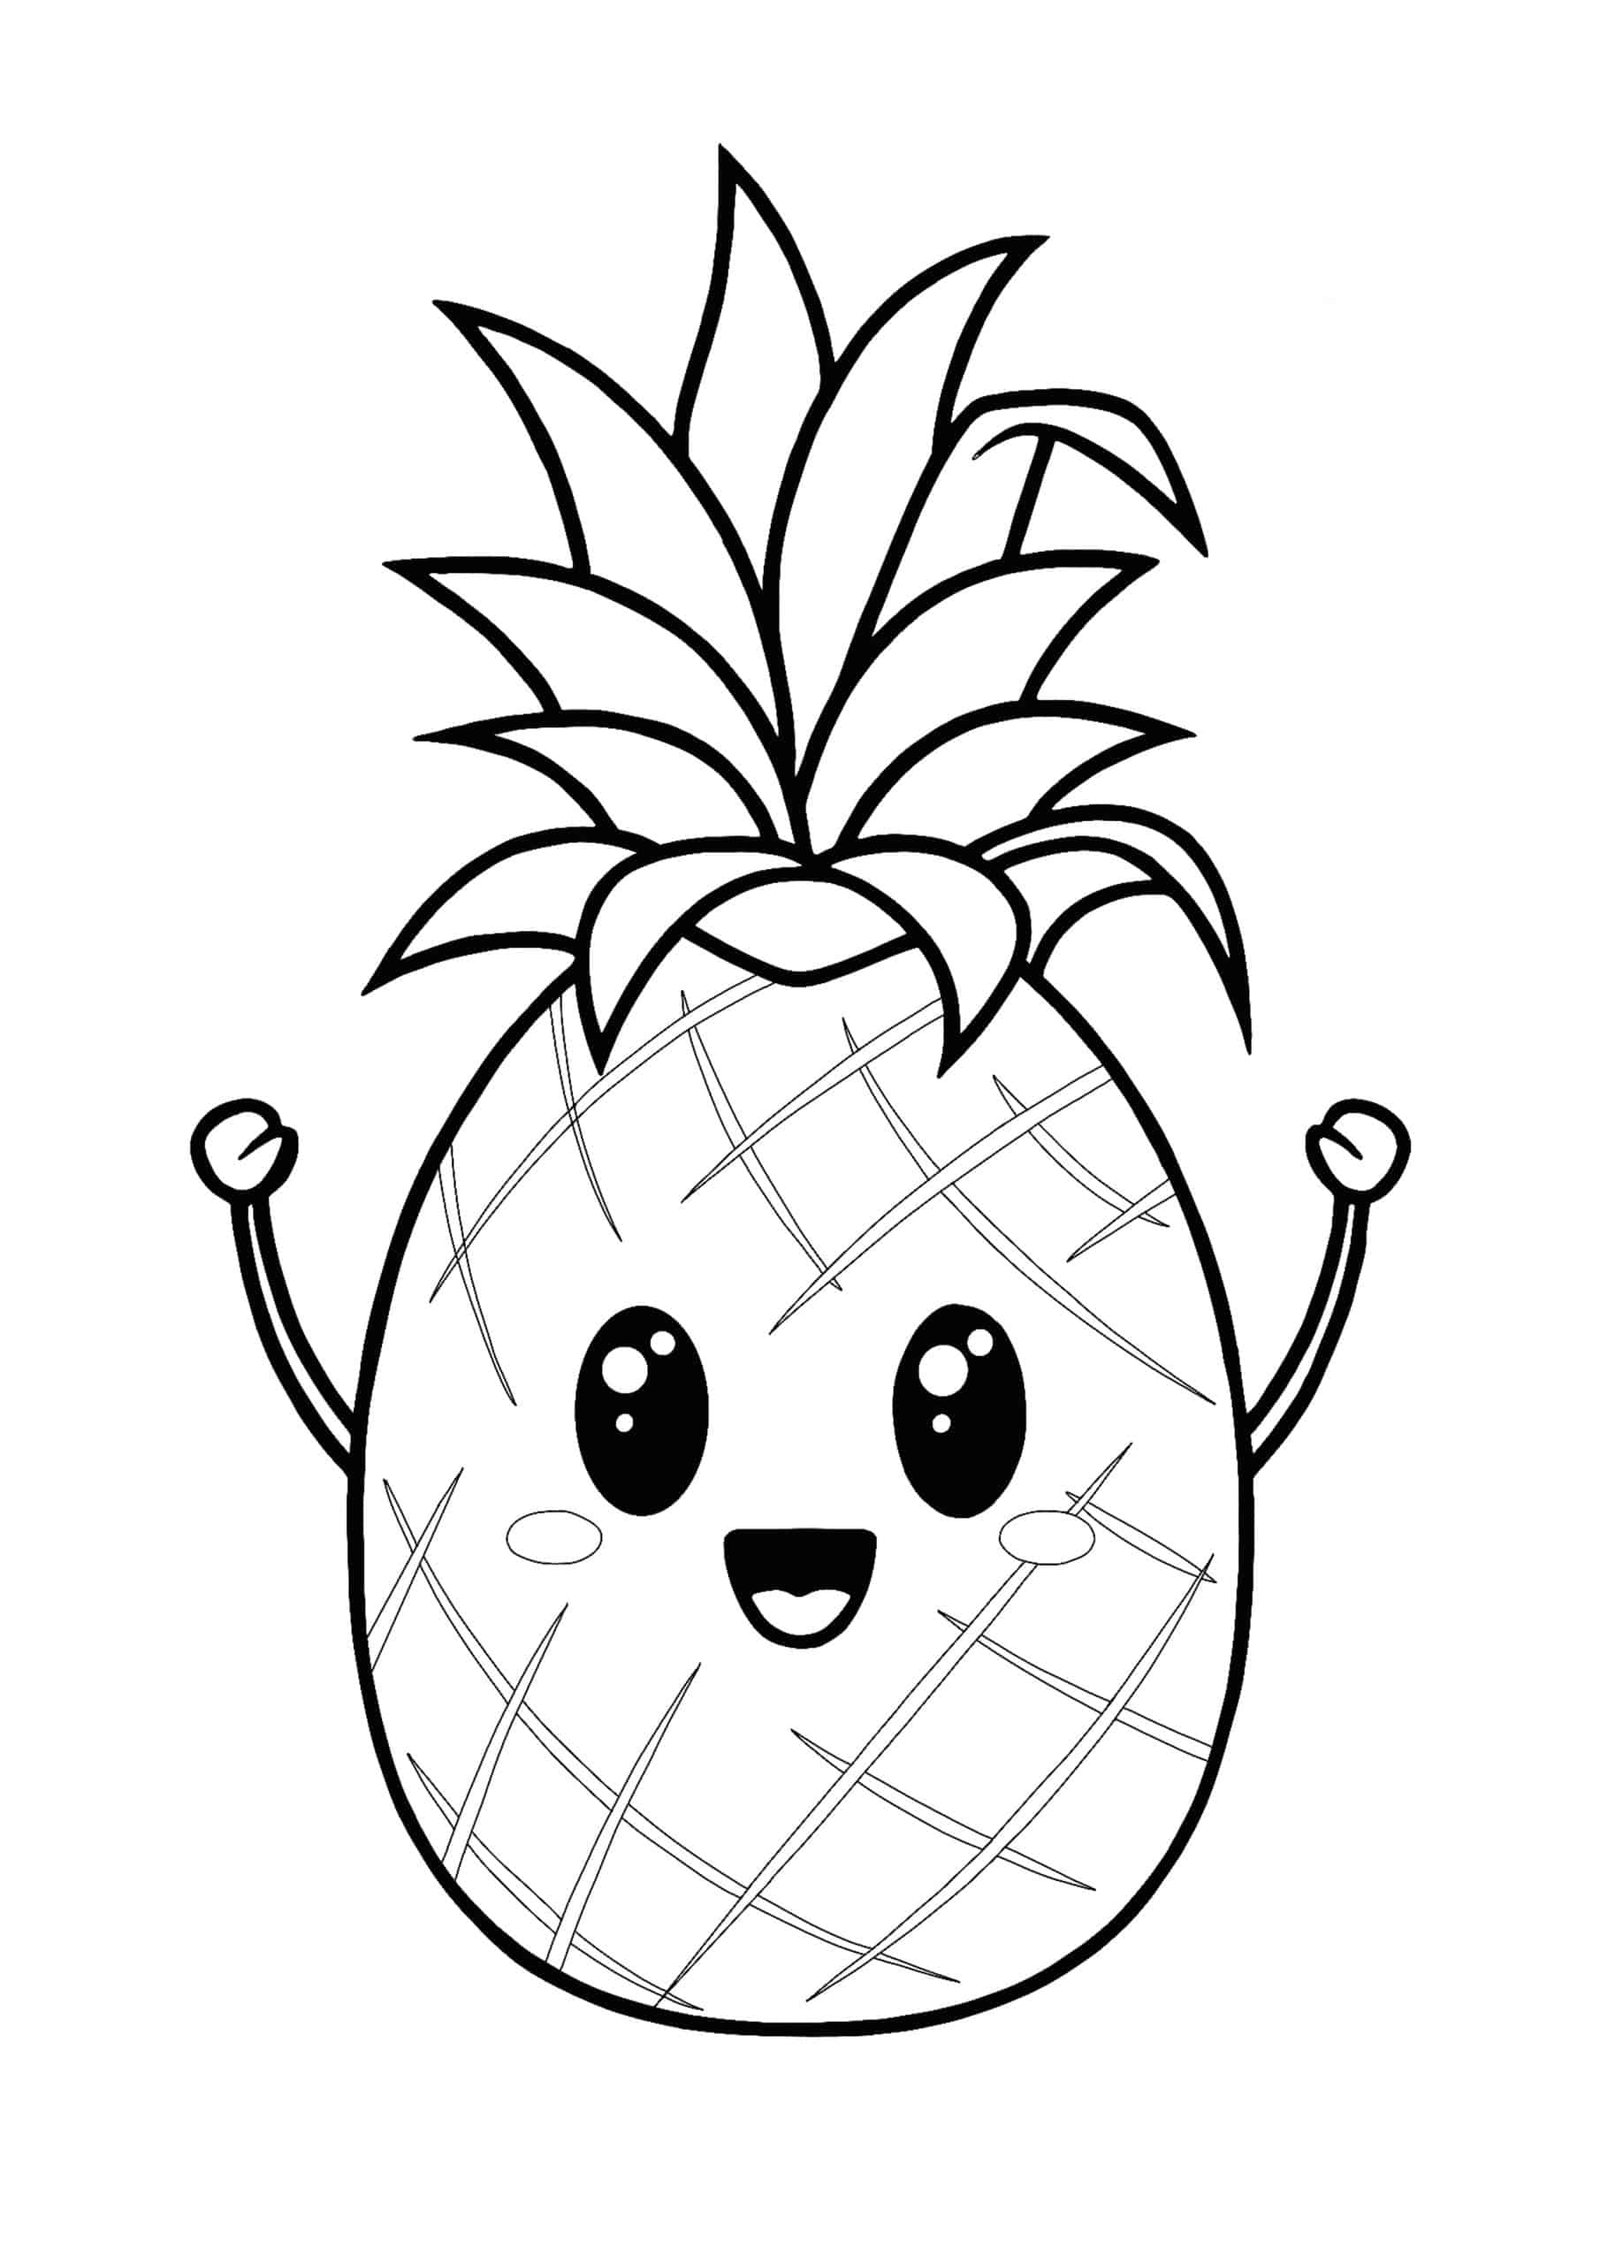 Cute Kawaii Pineapple coloring page